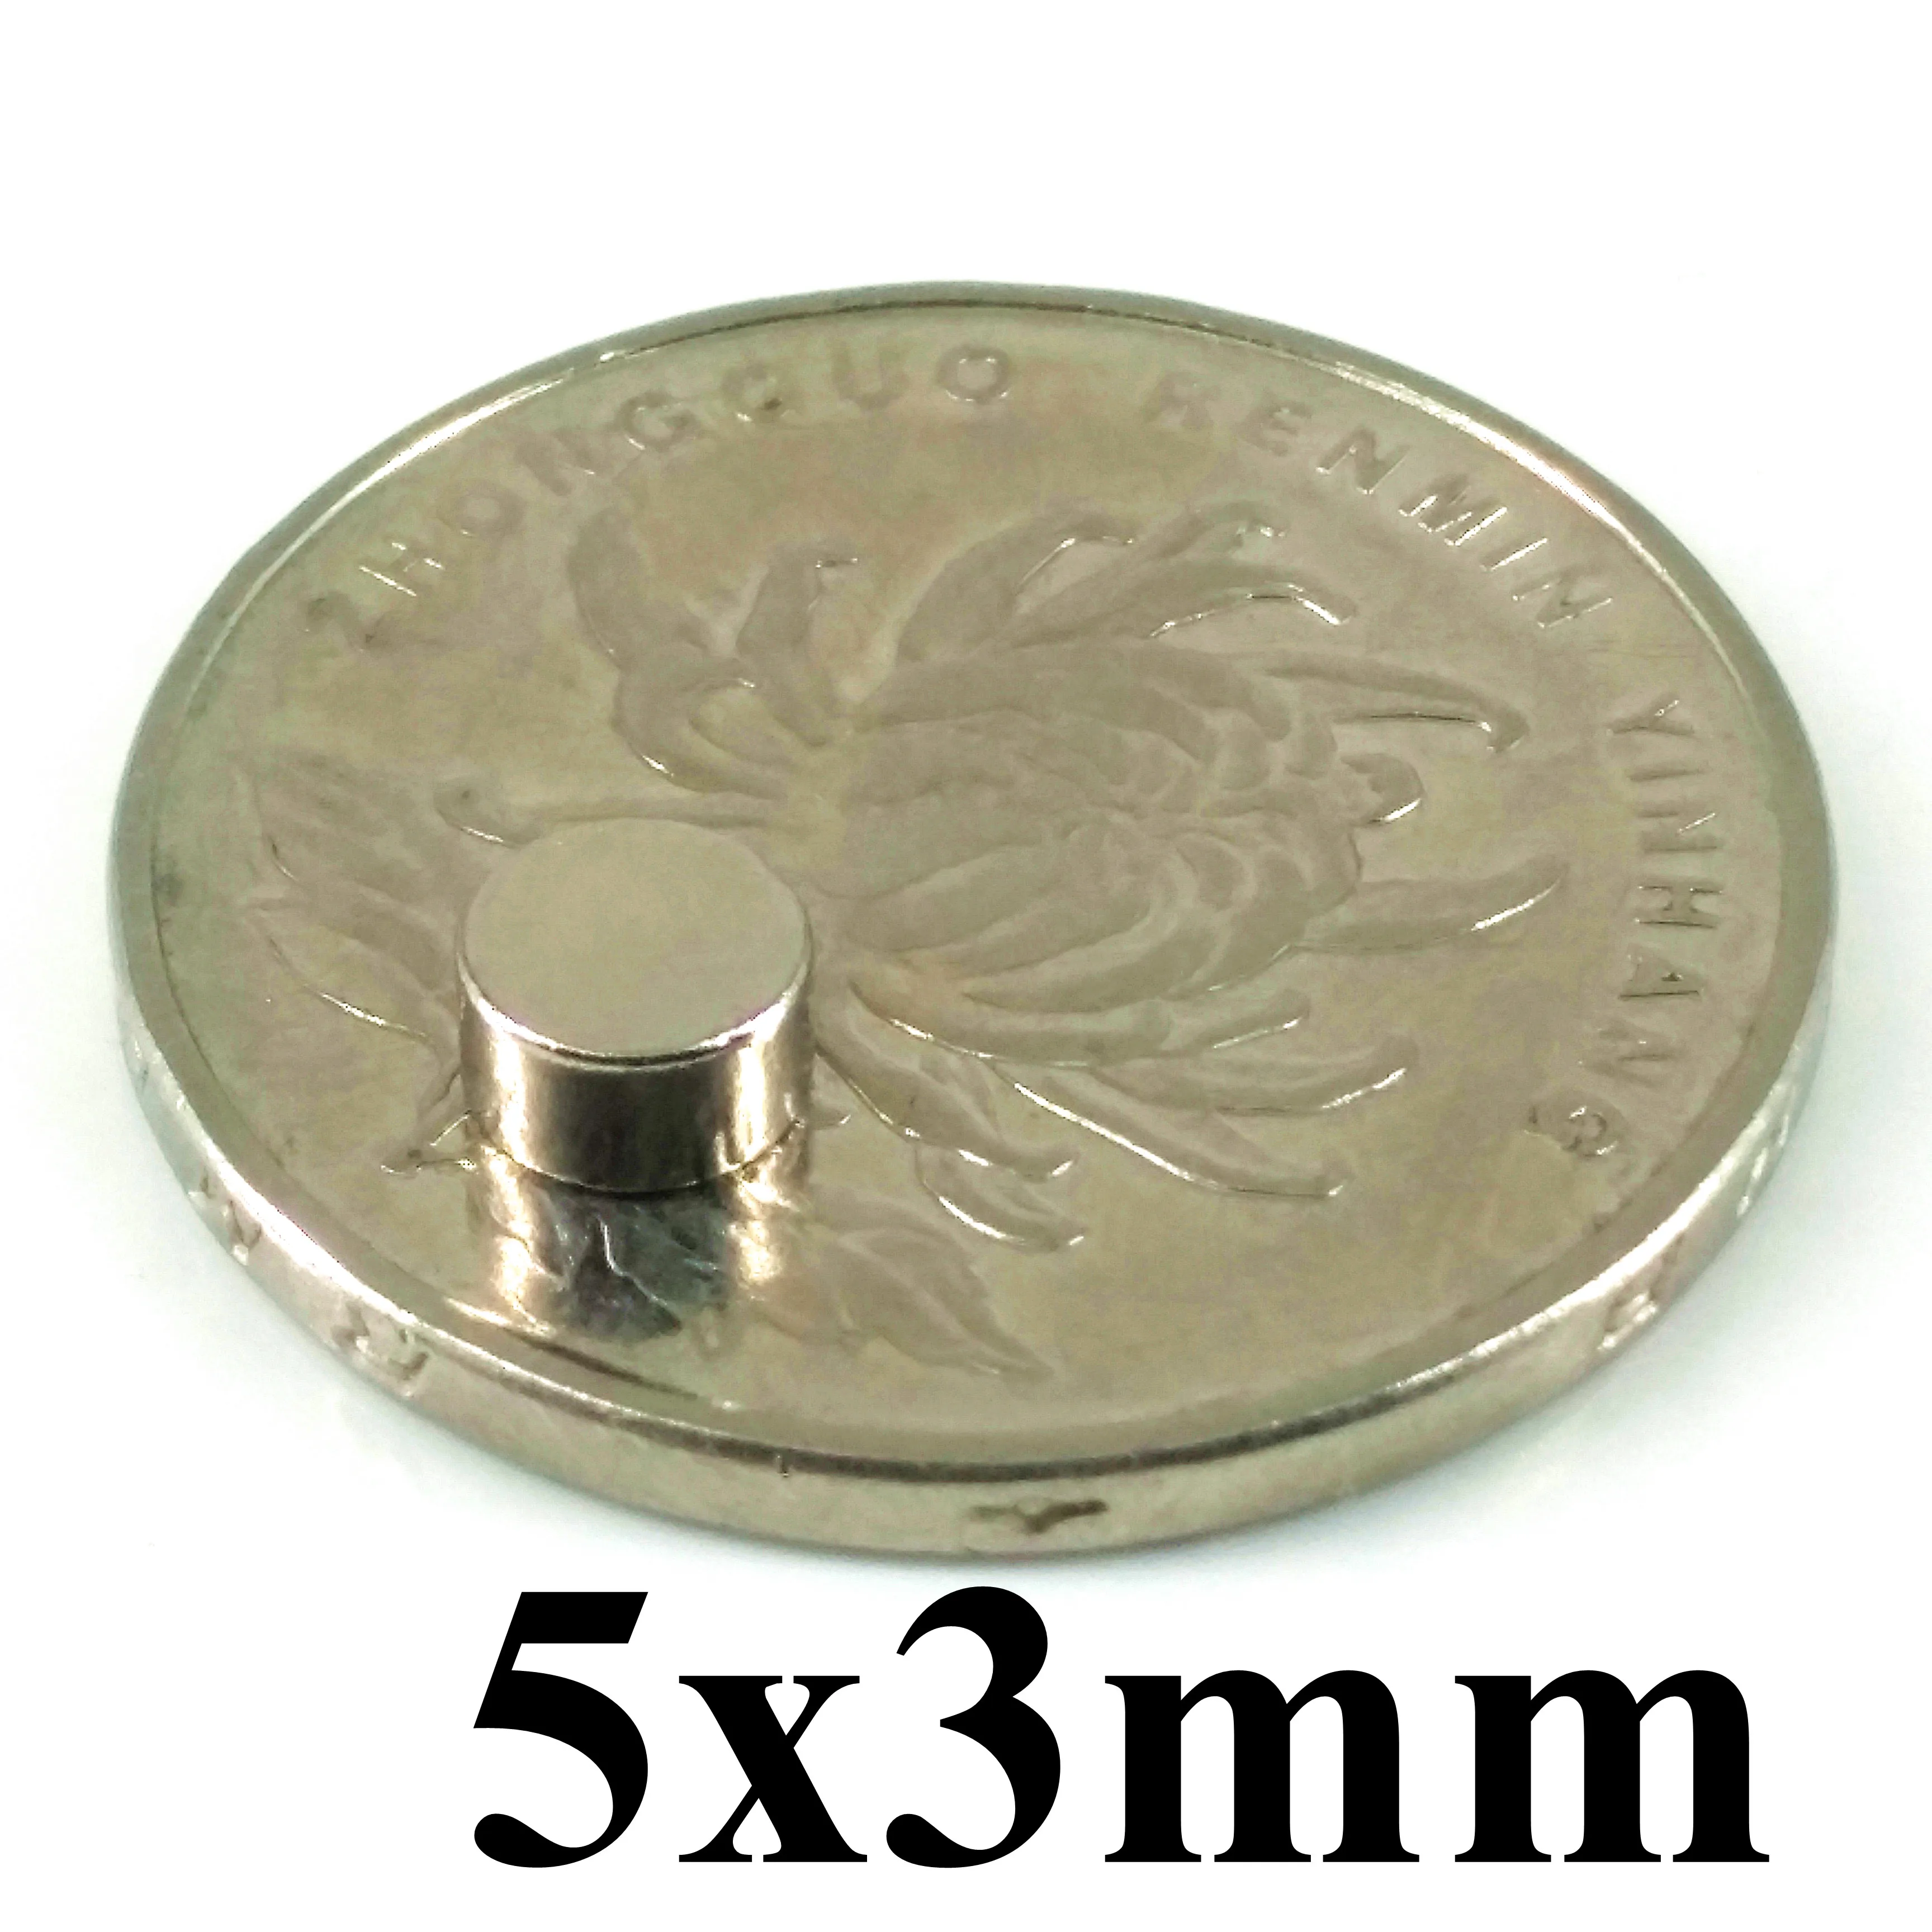 Pc 1000 Imanes de Neodimio 5mmx3 mm de tierras raras de neodimio fuerte imán permanente 3